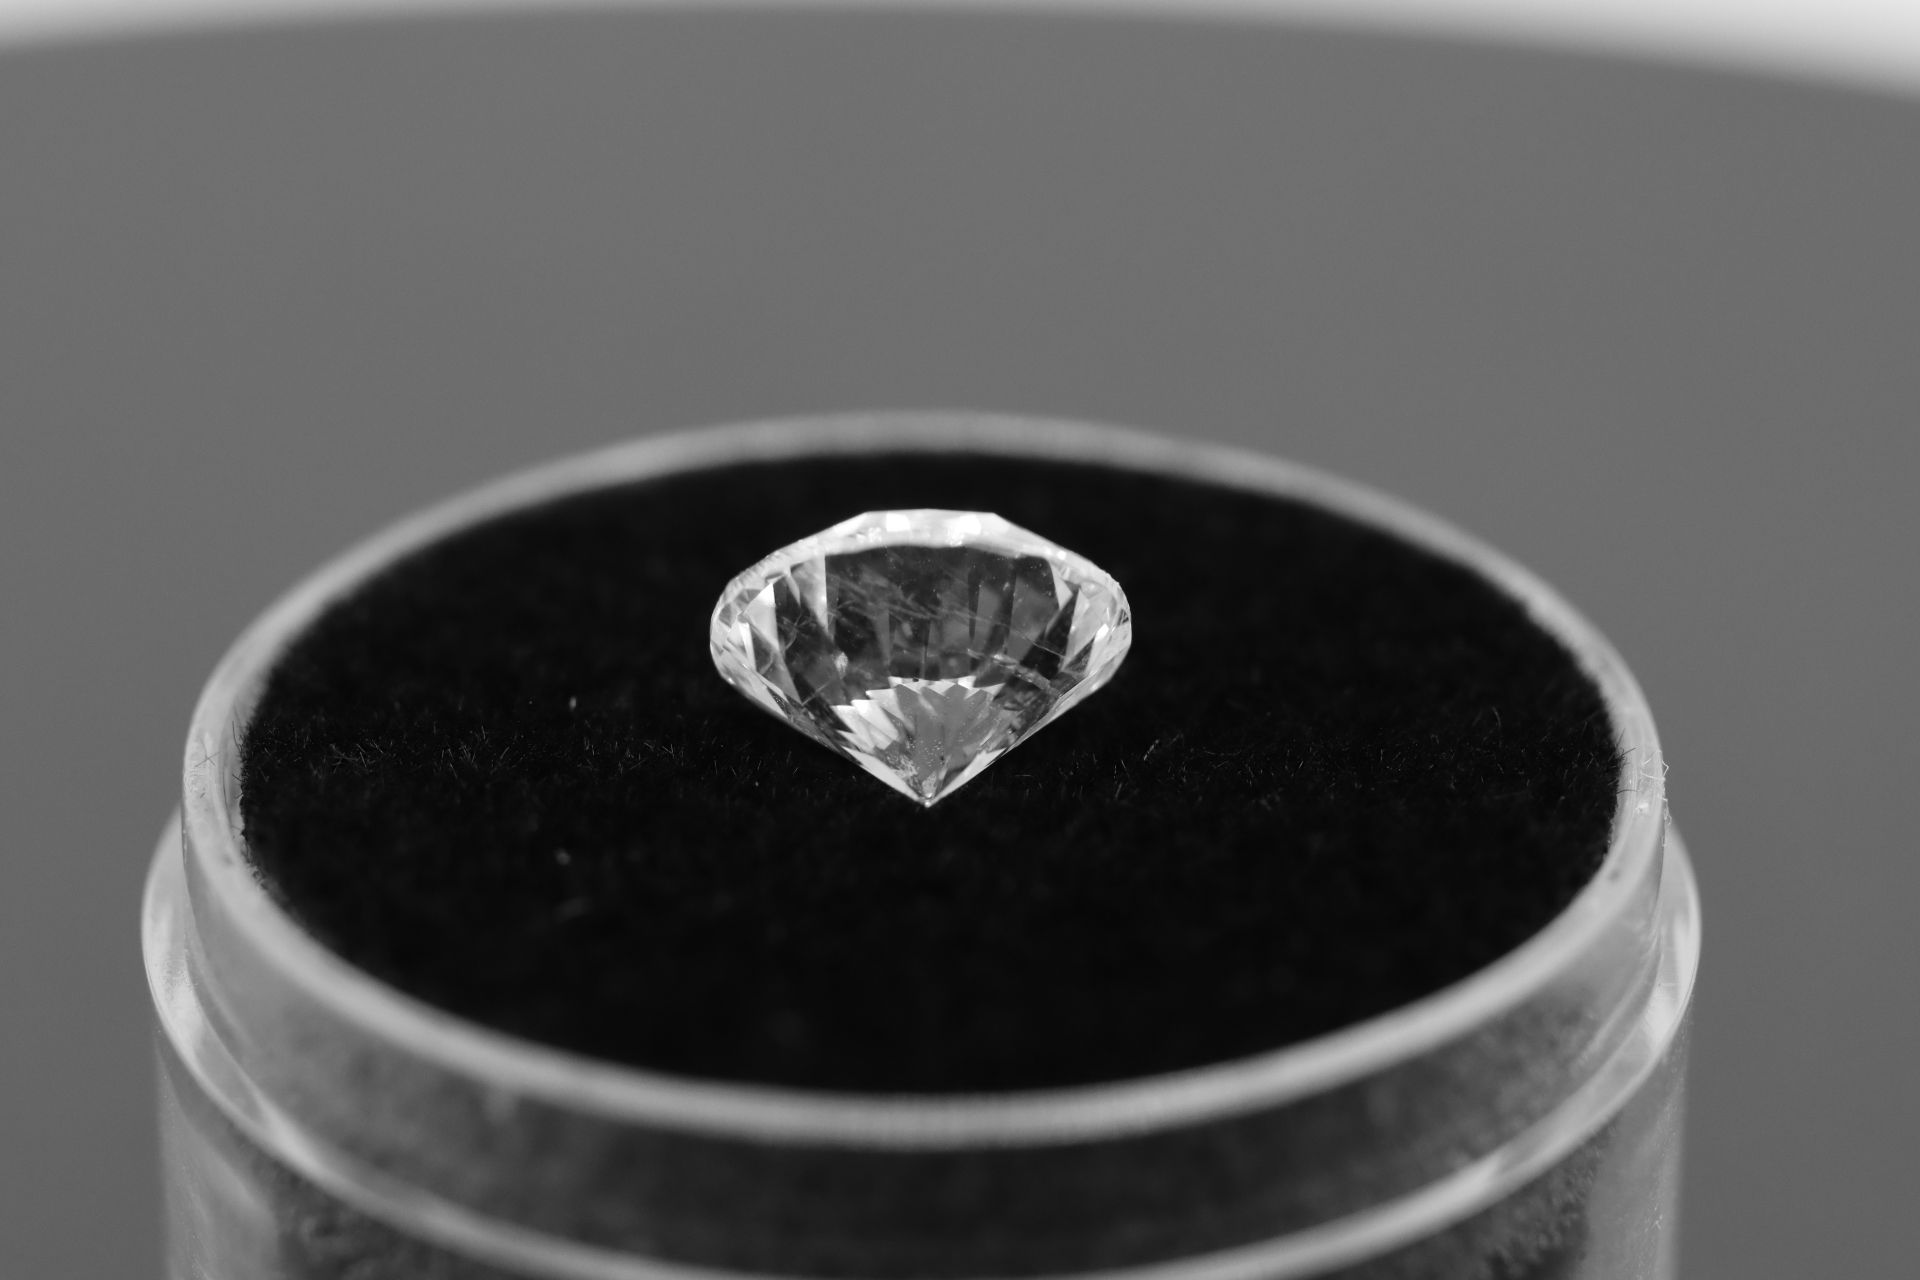 Single - Round Brilliant Cut Natural Diamond 2.00 Carat Colour D Clarity VS2 - AGI Cert DL190531057 - Image 6 of 12